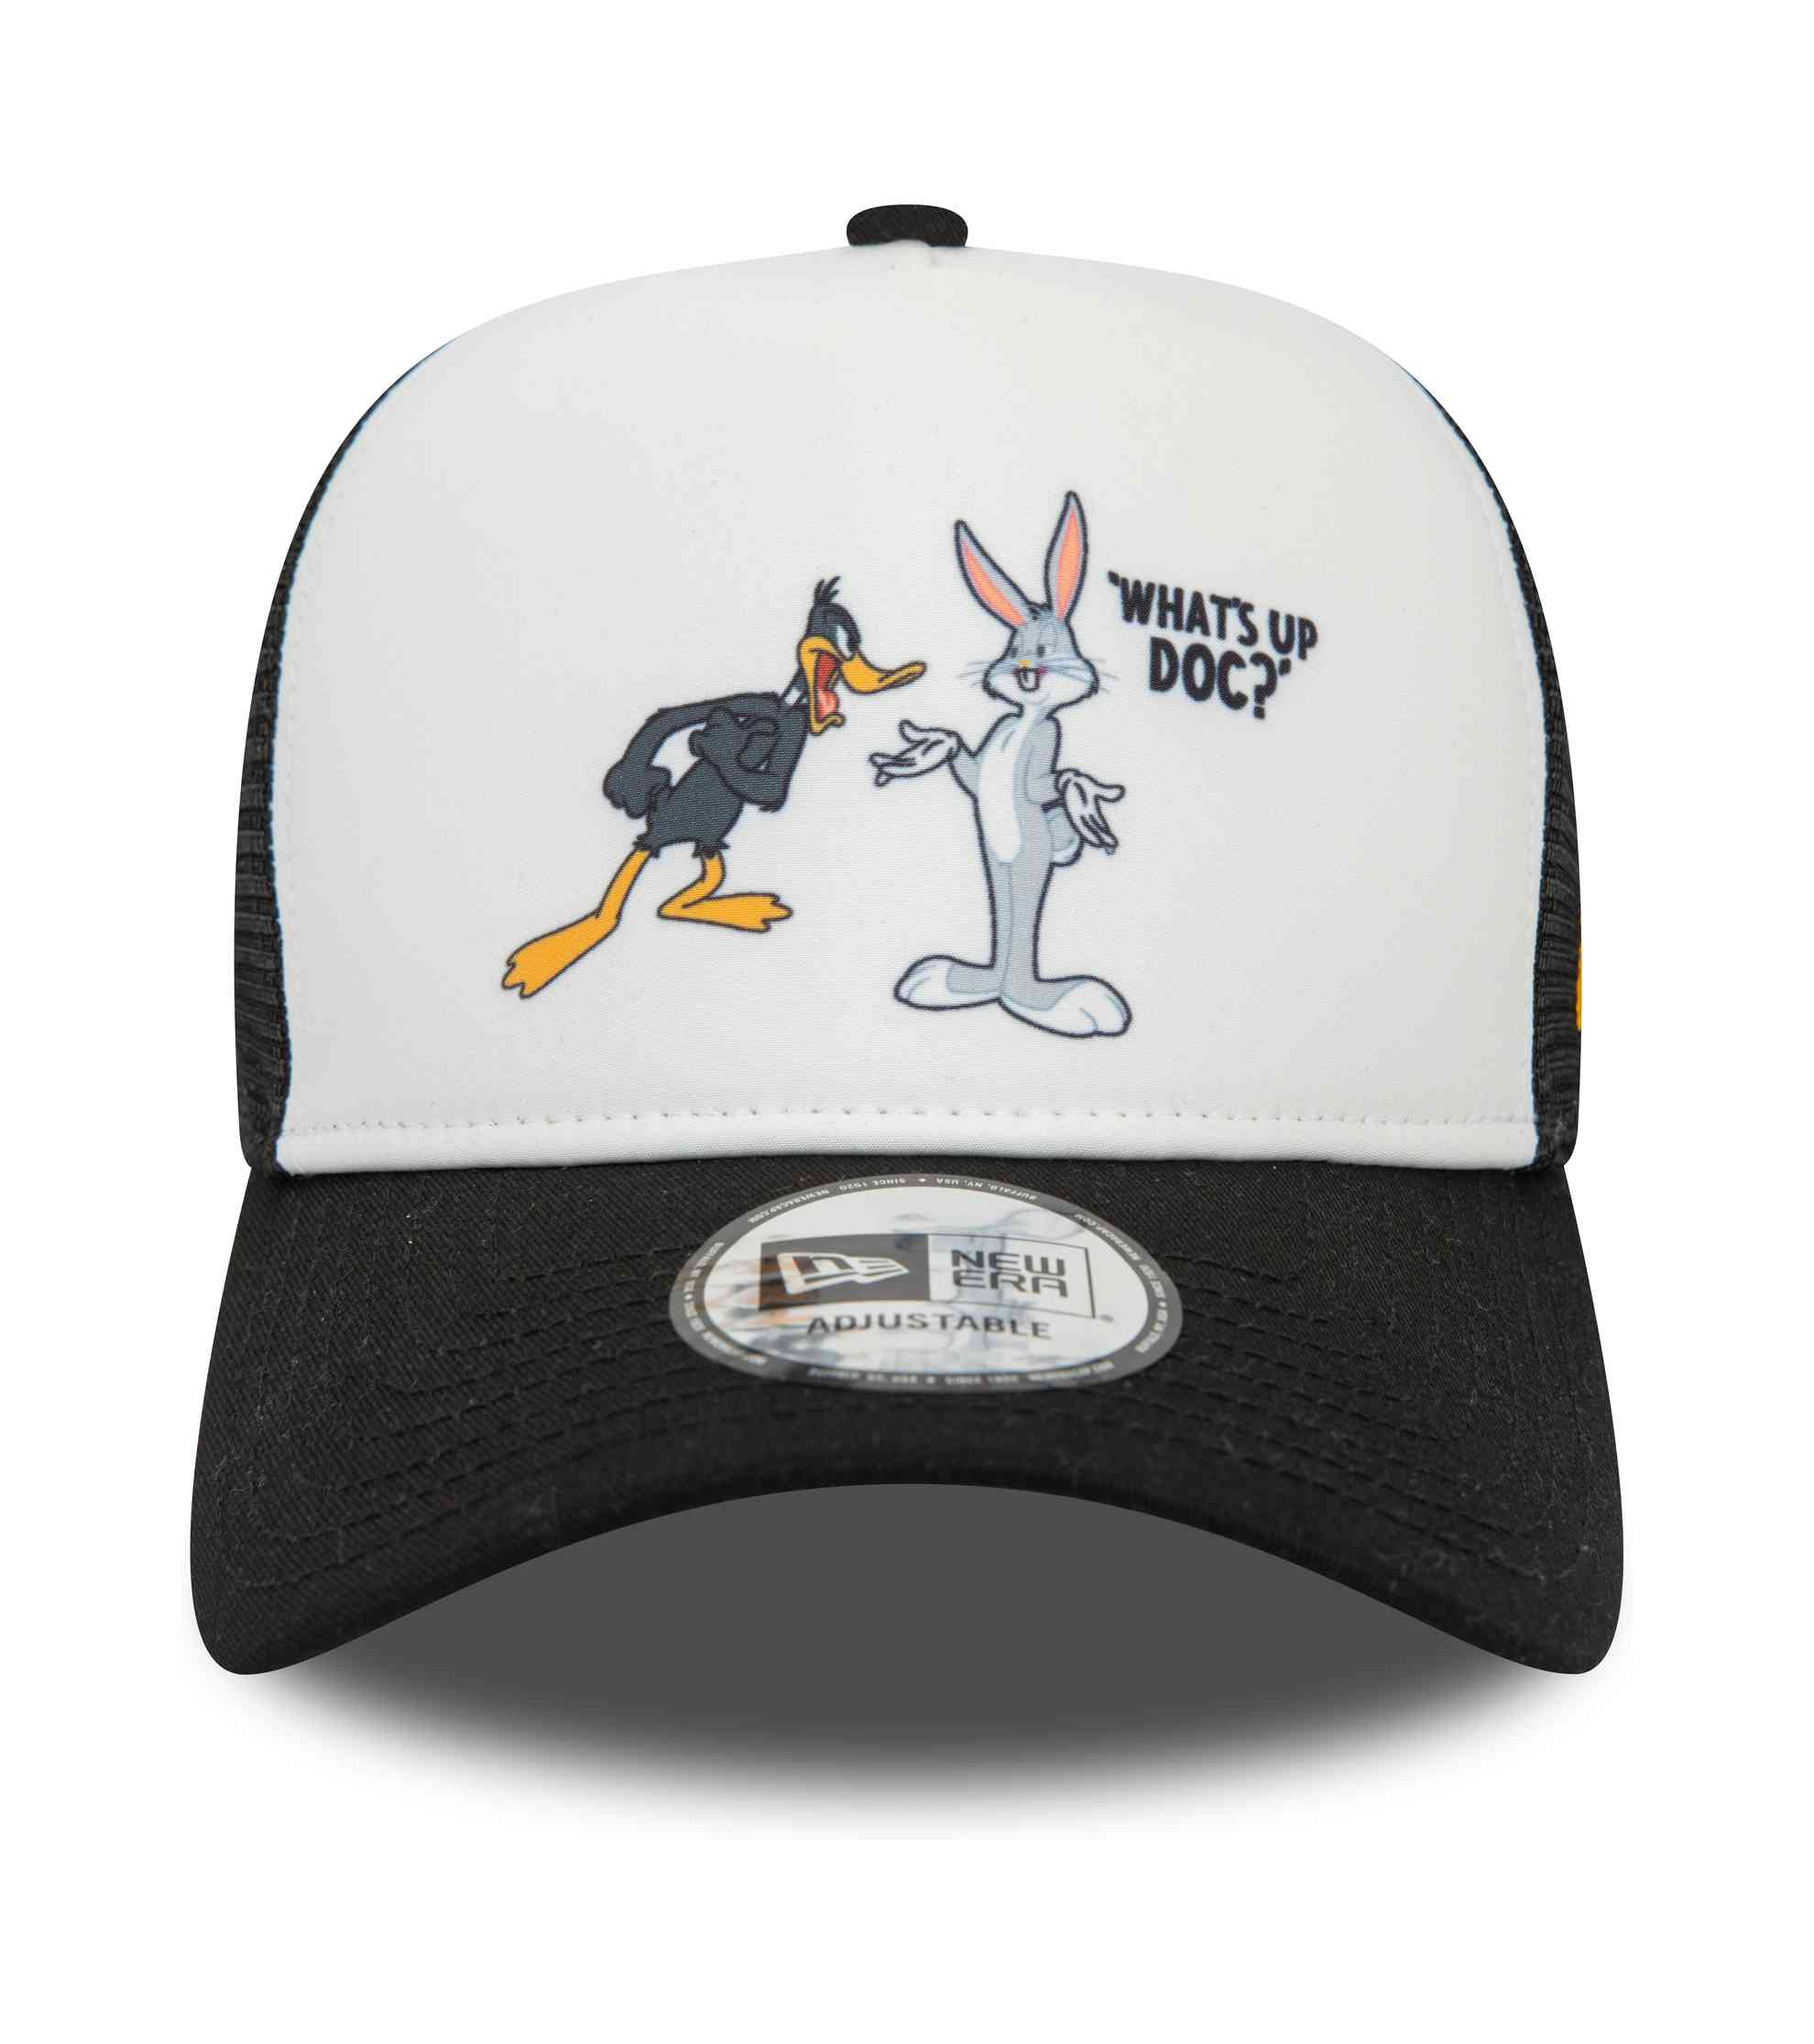 New Era - Looney Tunes Trucker Snapback Cap